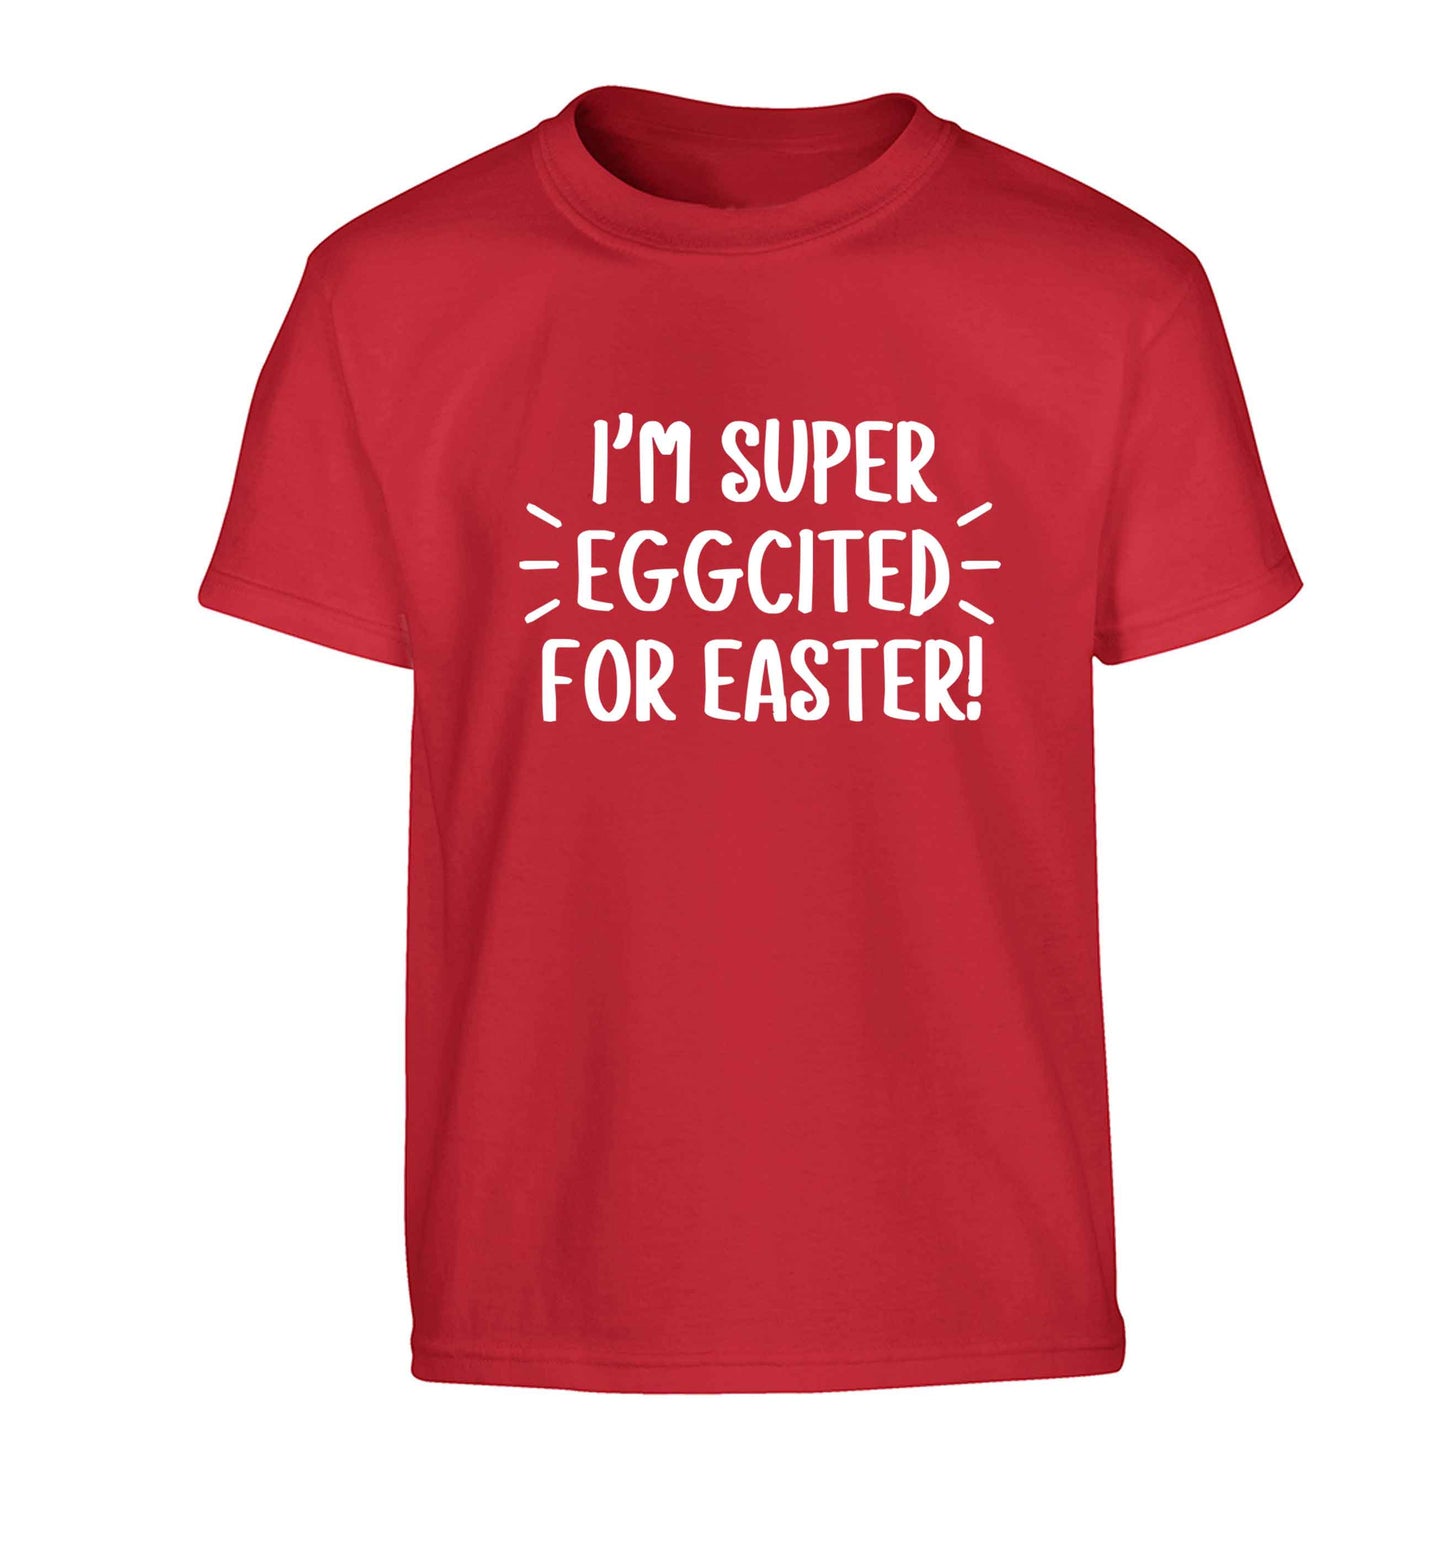 I'm super eggcited for Easter Children's red Tshirt 12-13 Years